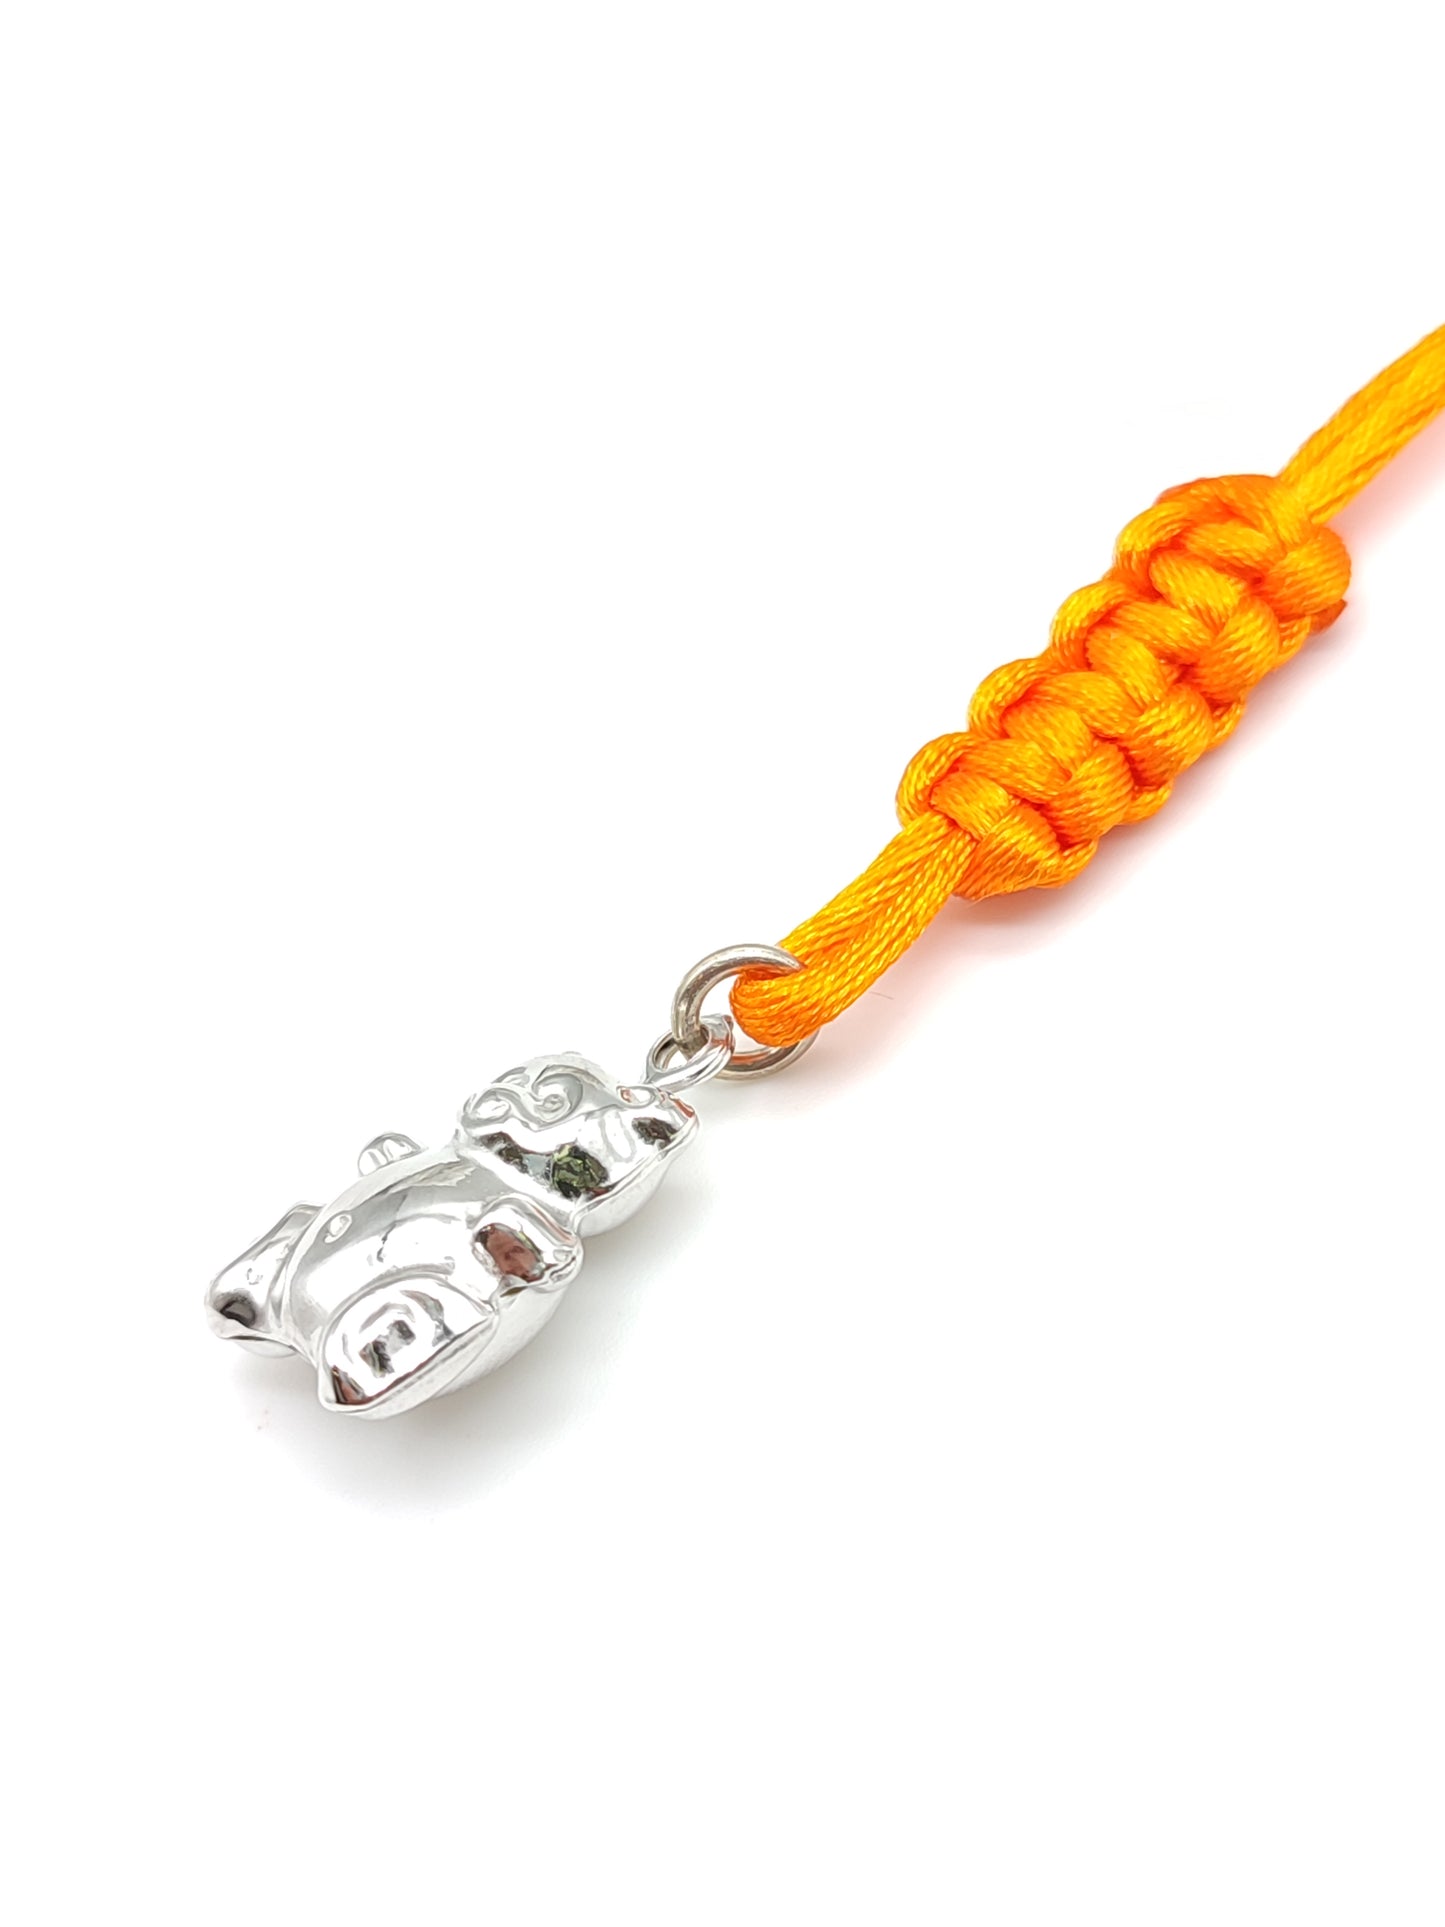 Silver teddy bear key ring with satin cord